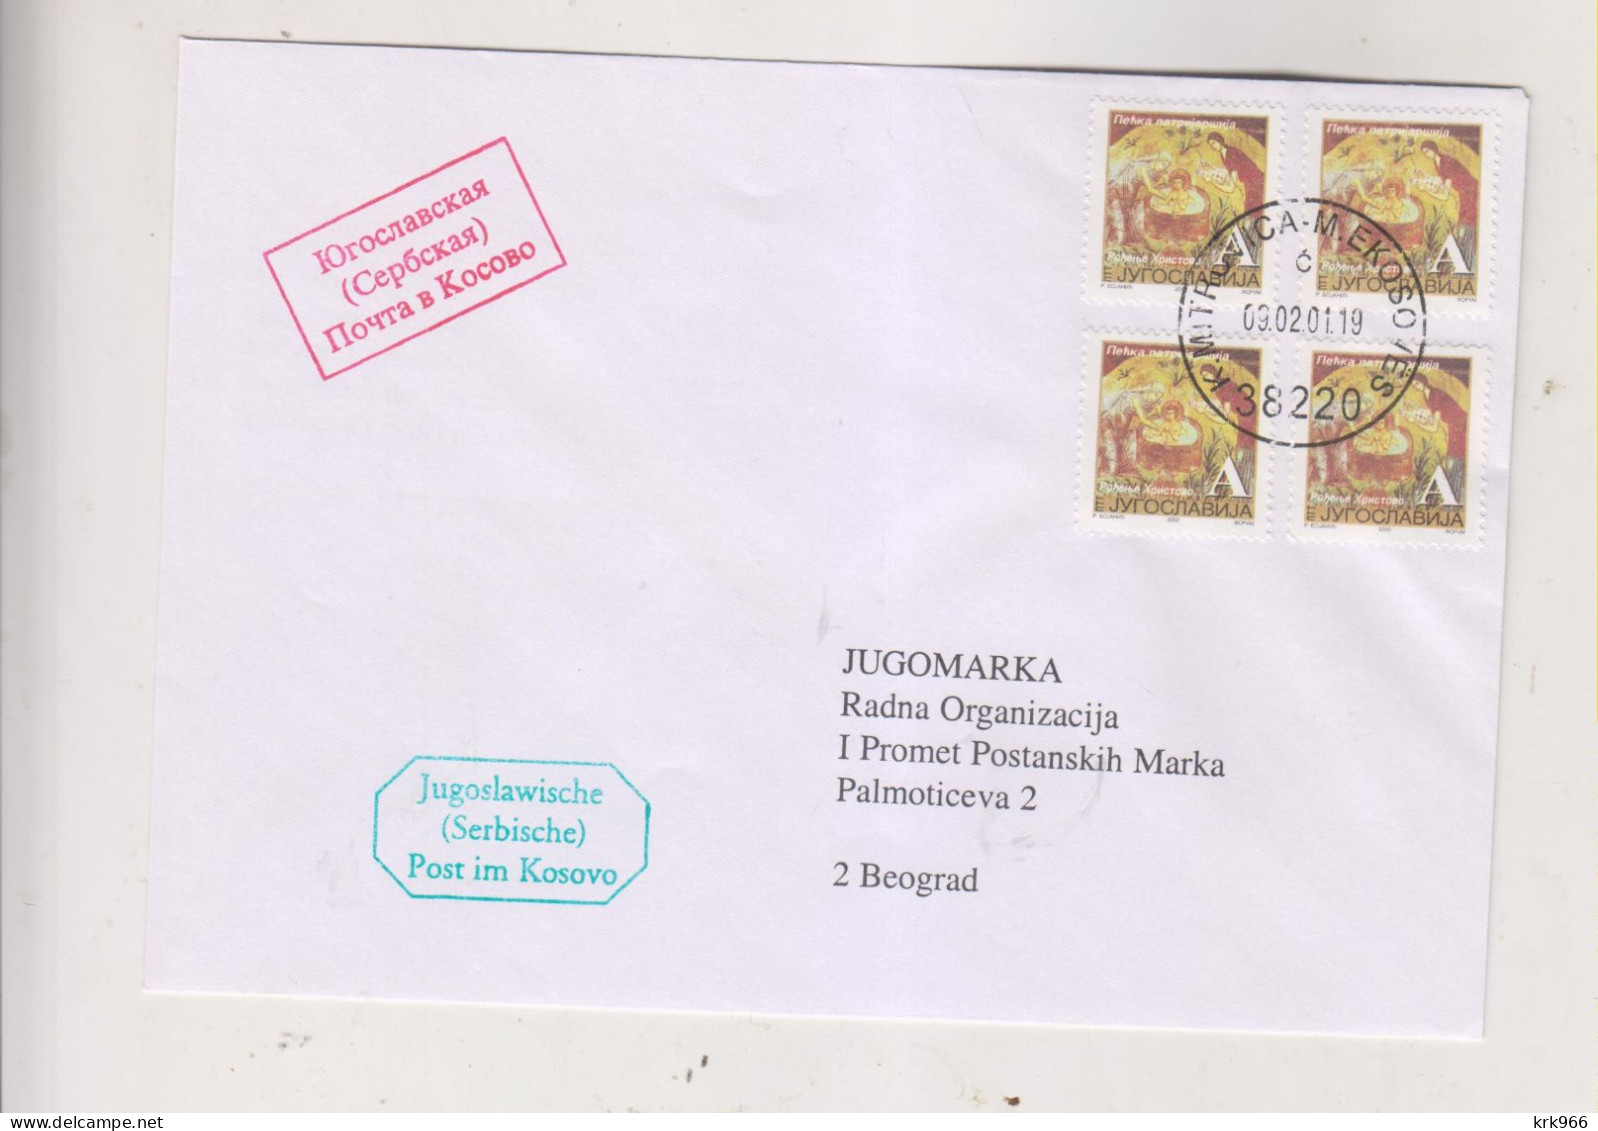 YUGOSLAVIA,2001 KOSOVO KOSOVSKA MITROVICA SERBIAN POST Nice Cover - Lettres & Documents